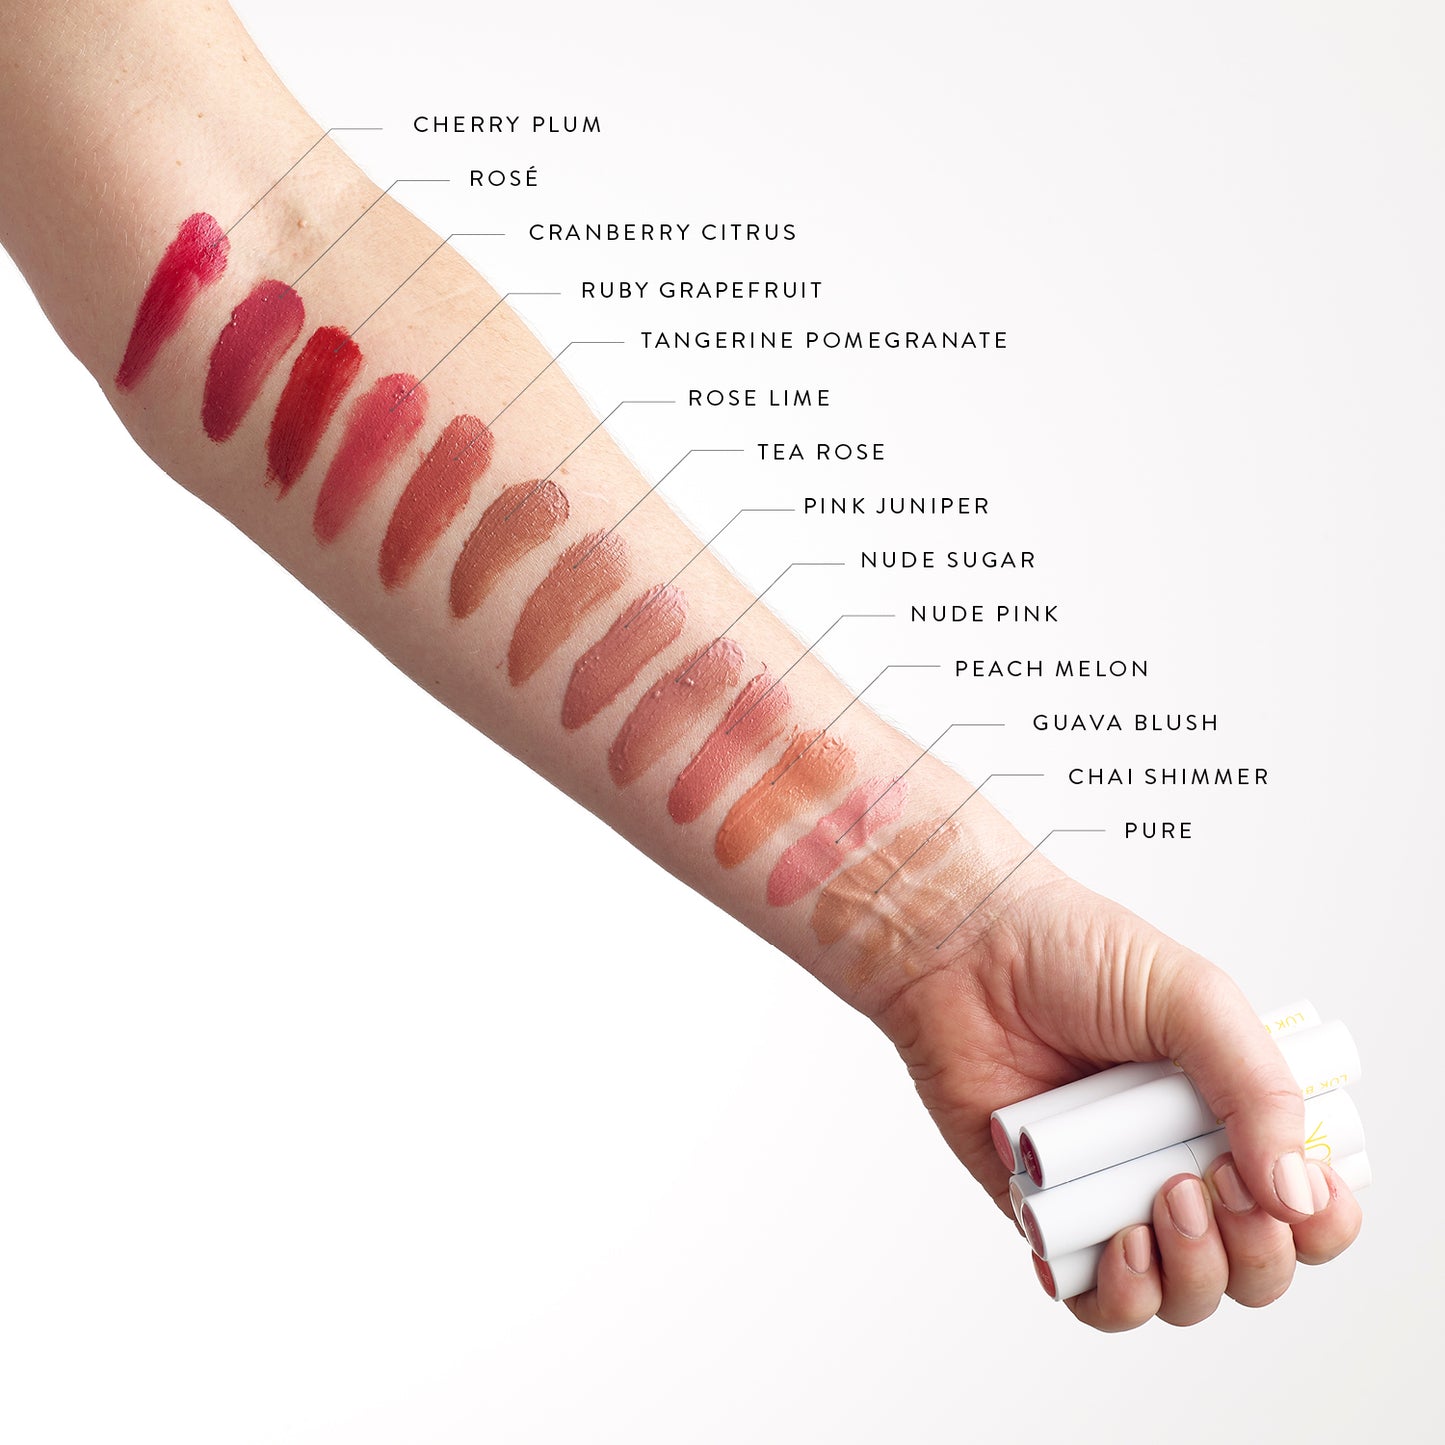 Complete Menu Special: All 14 Lip Nourish™ Natural Lipstick Shades